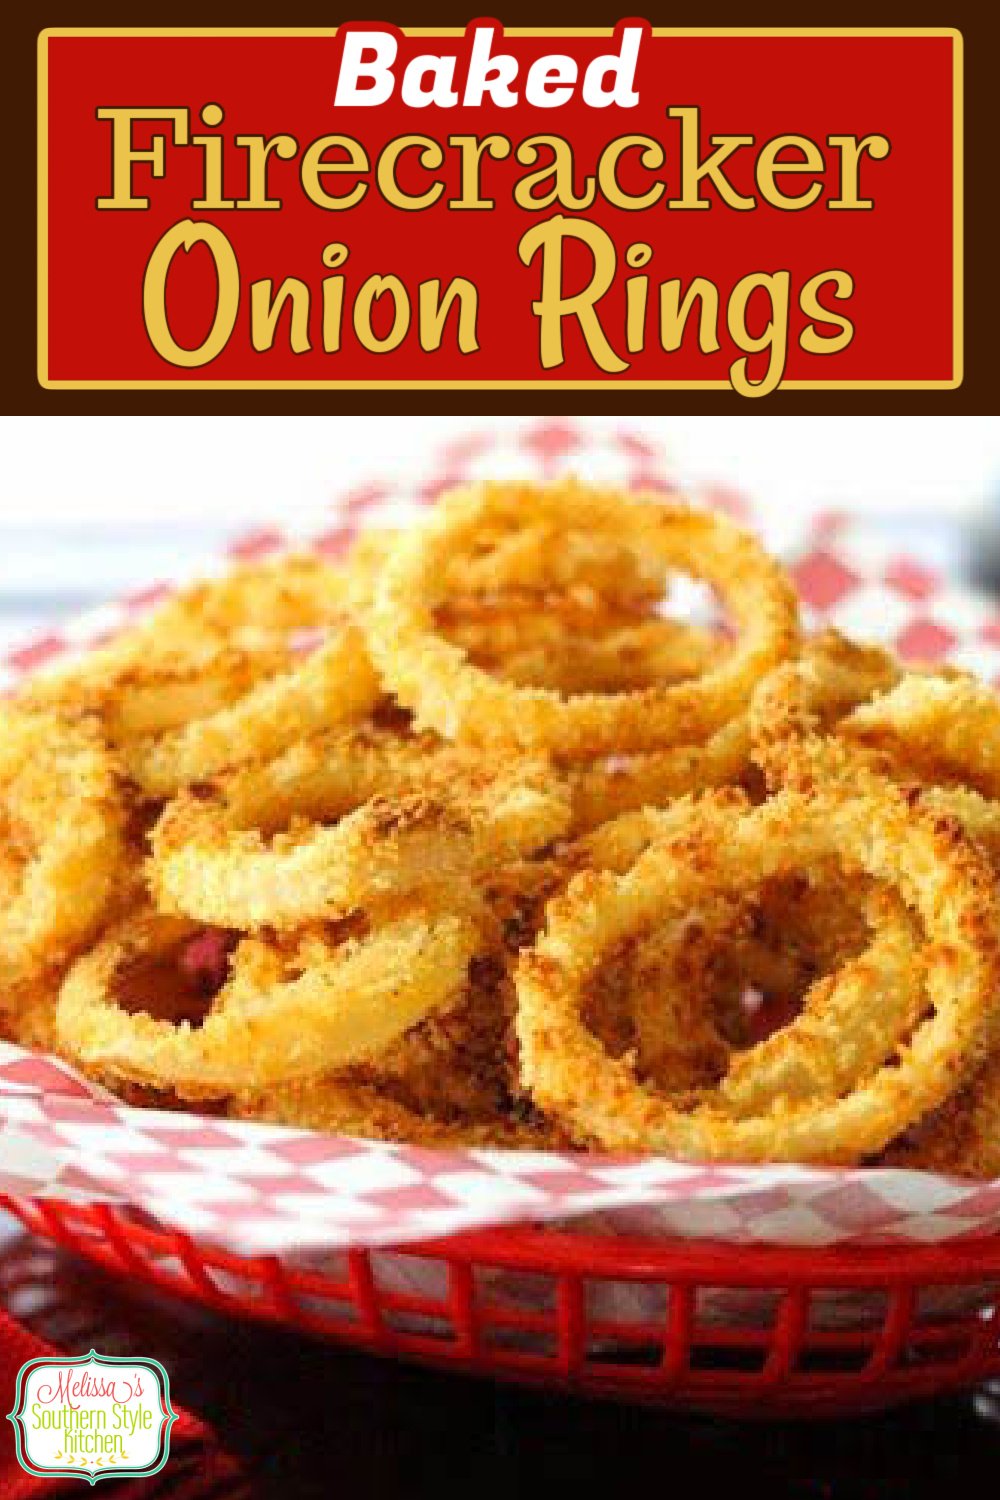 This golden crispy Firecracker Onion Rings are baked not fried! #onionrings #firecrackeronions #appetizers #onionrecipes #onionringrecipes #breadedonionrings via @melissasssk